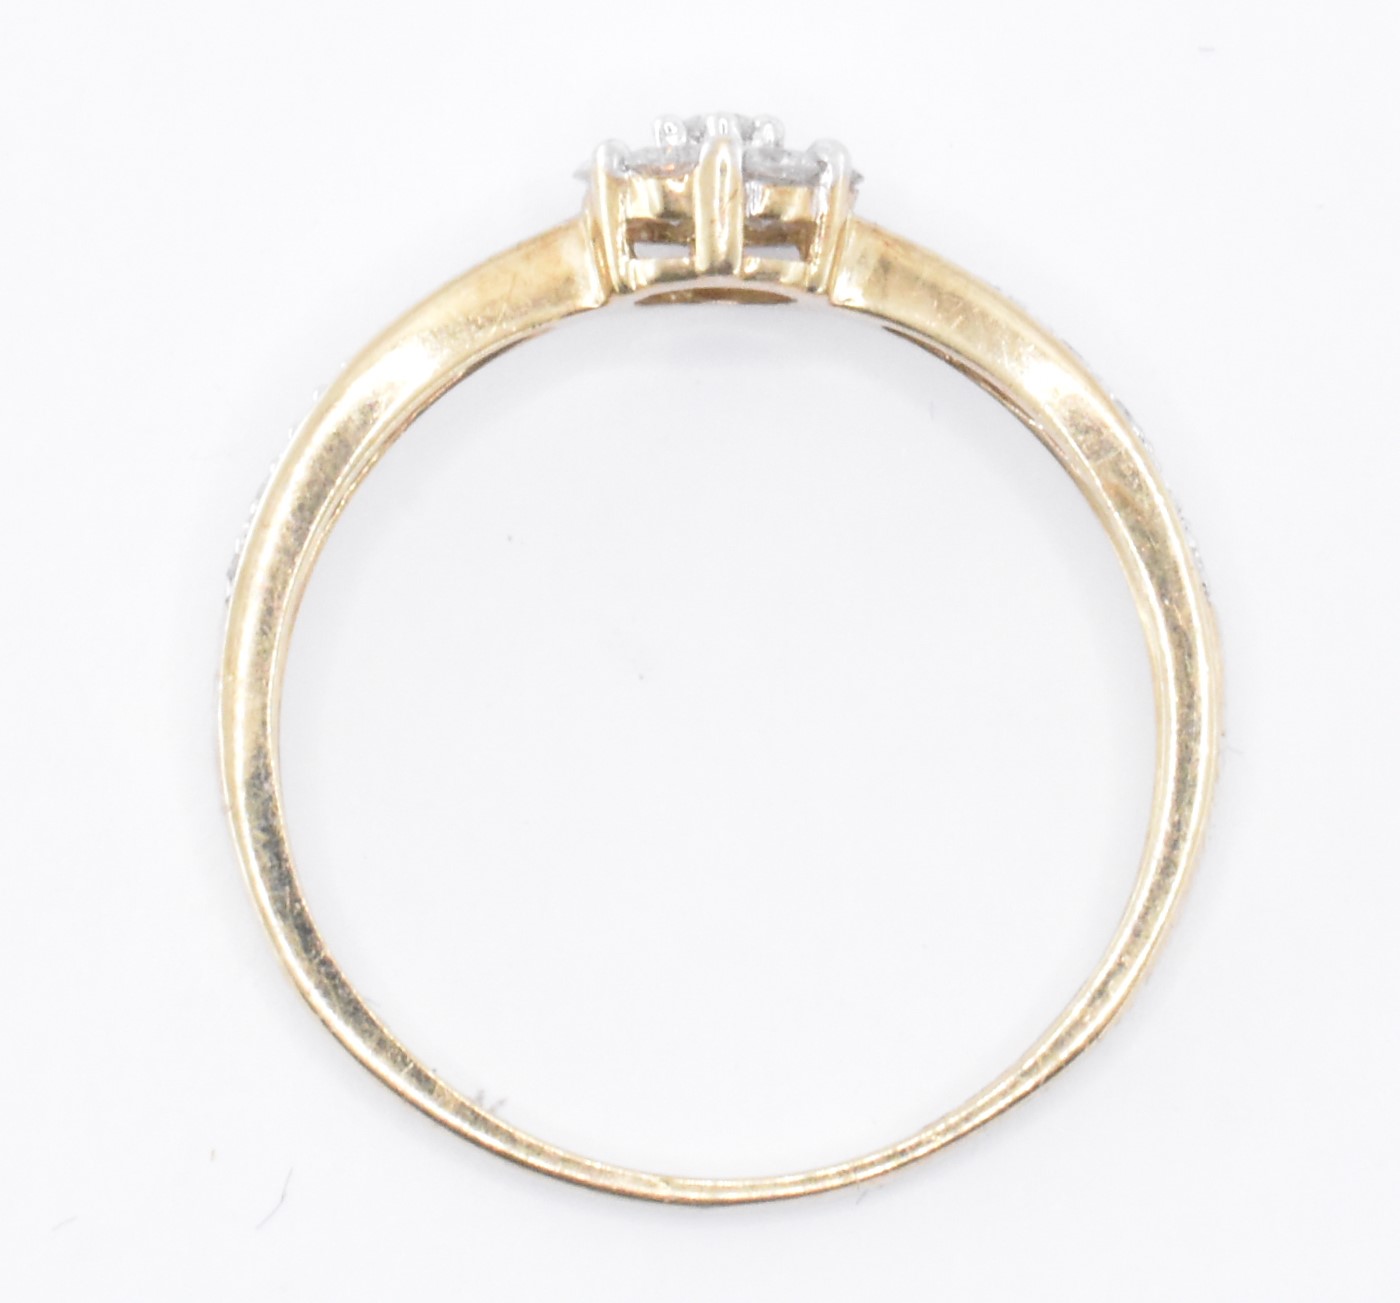 HALLMARKED 9CT GOLD & DIAMOND RING - Image 7 of 7